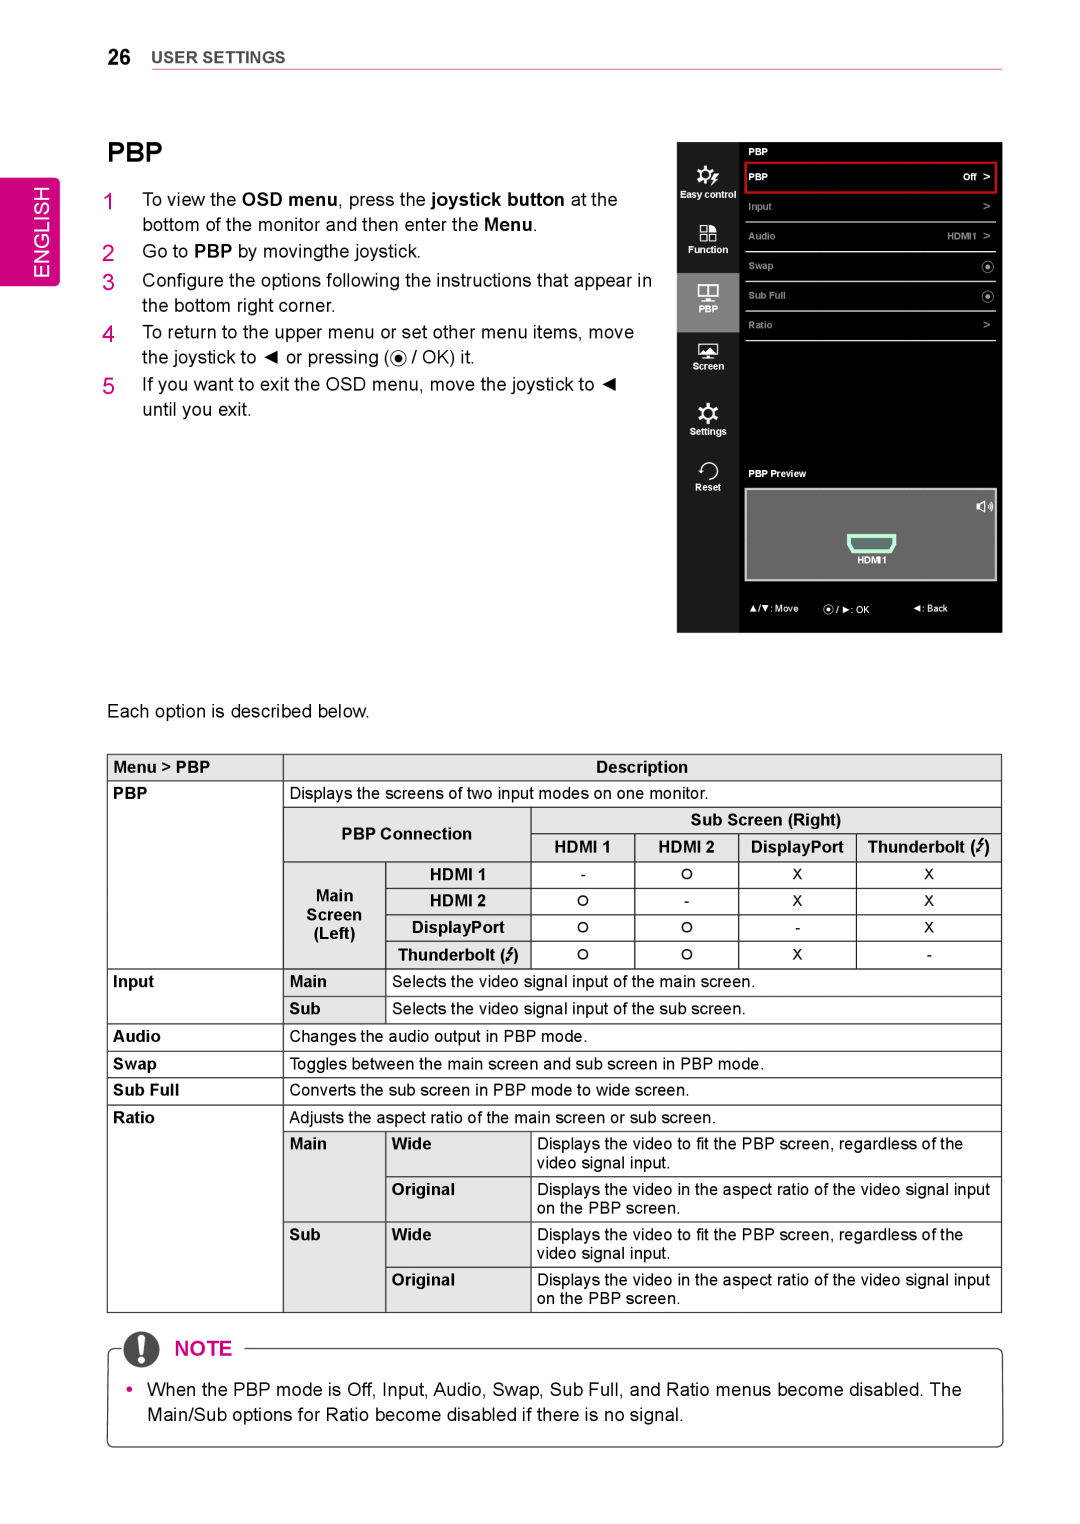 LG Electronics 34UM95-PD/ 34UM95-PE / 34UM94-PD owner manual English, User Settings 